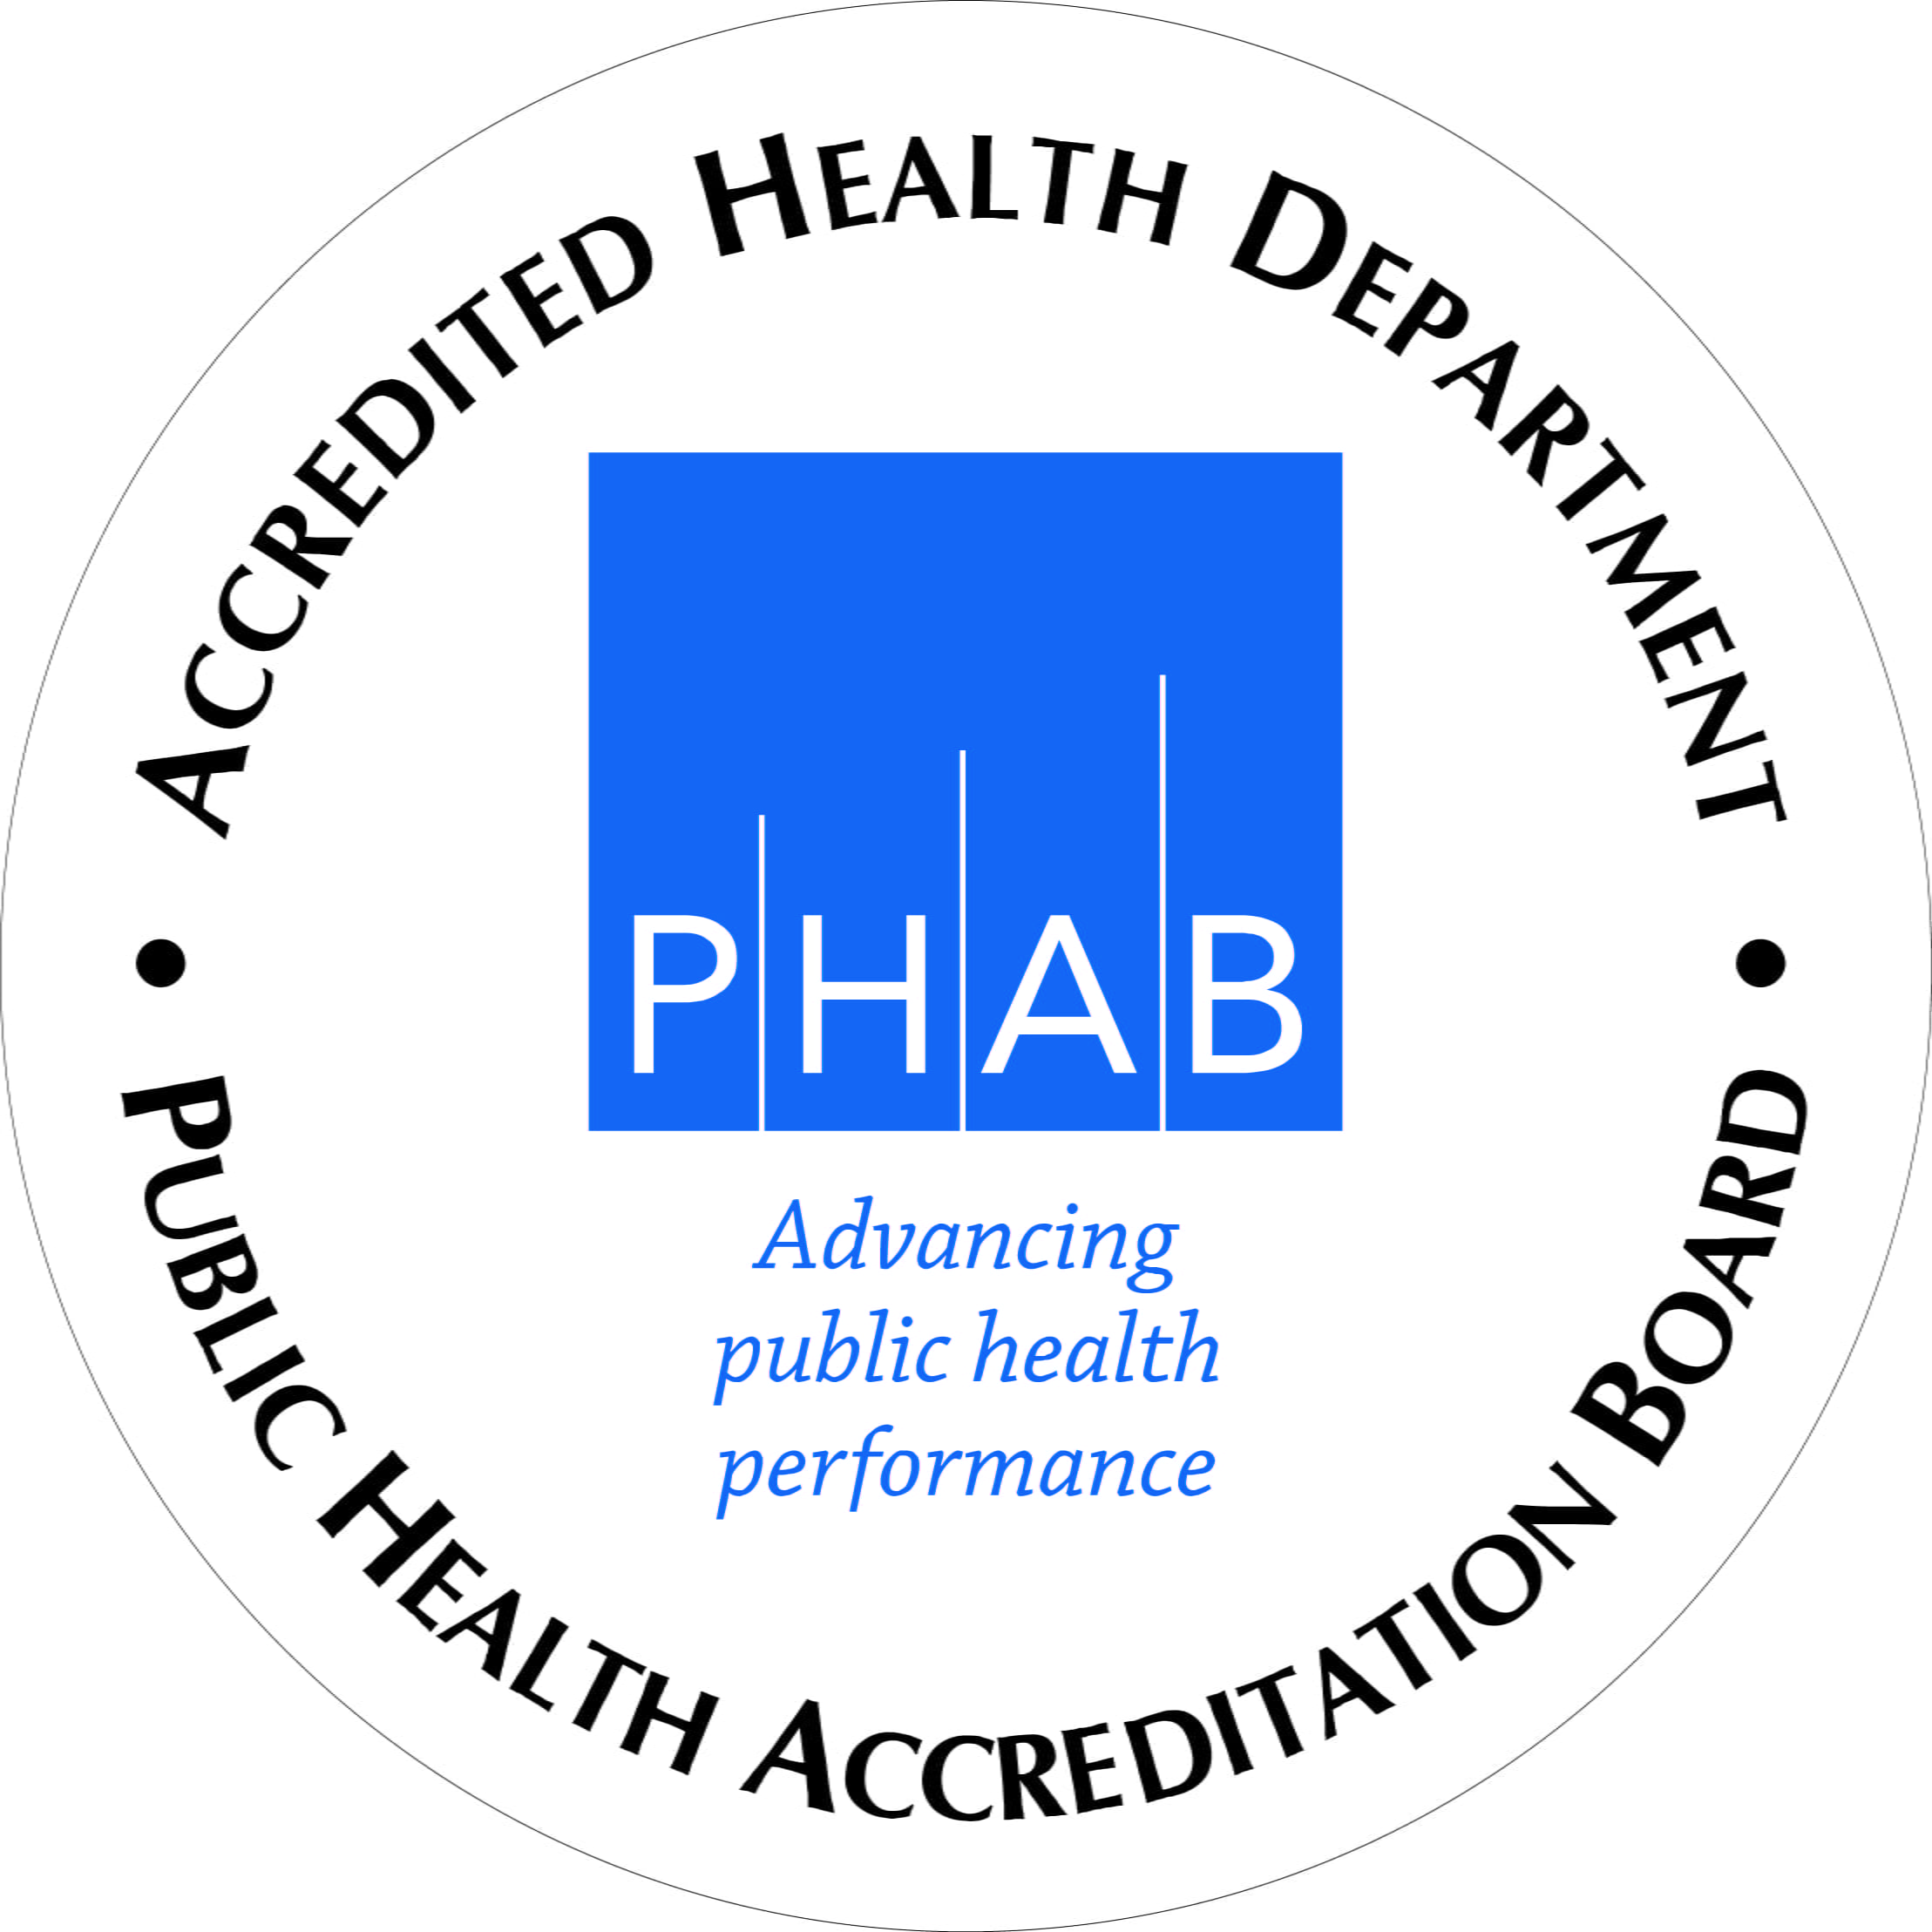 Public Health Accreditation Seal Image